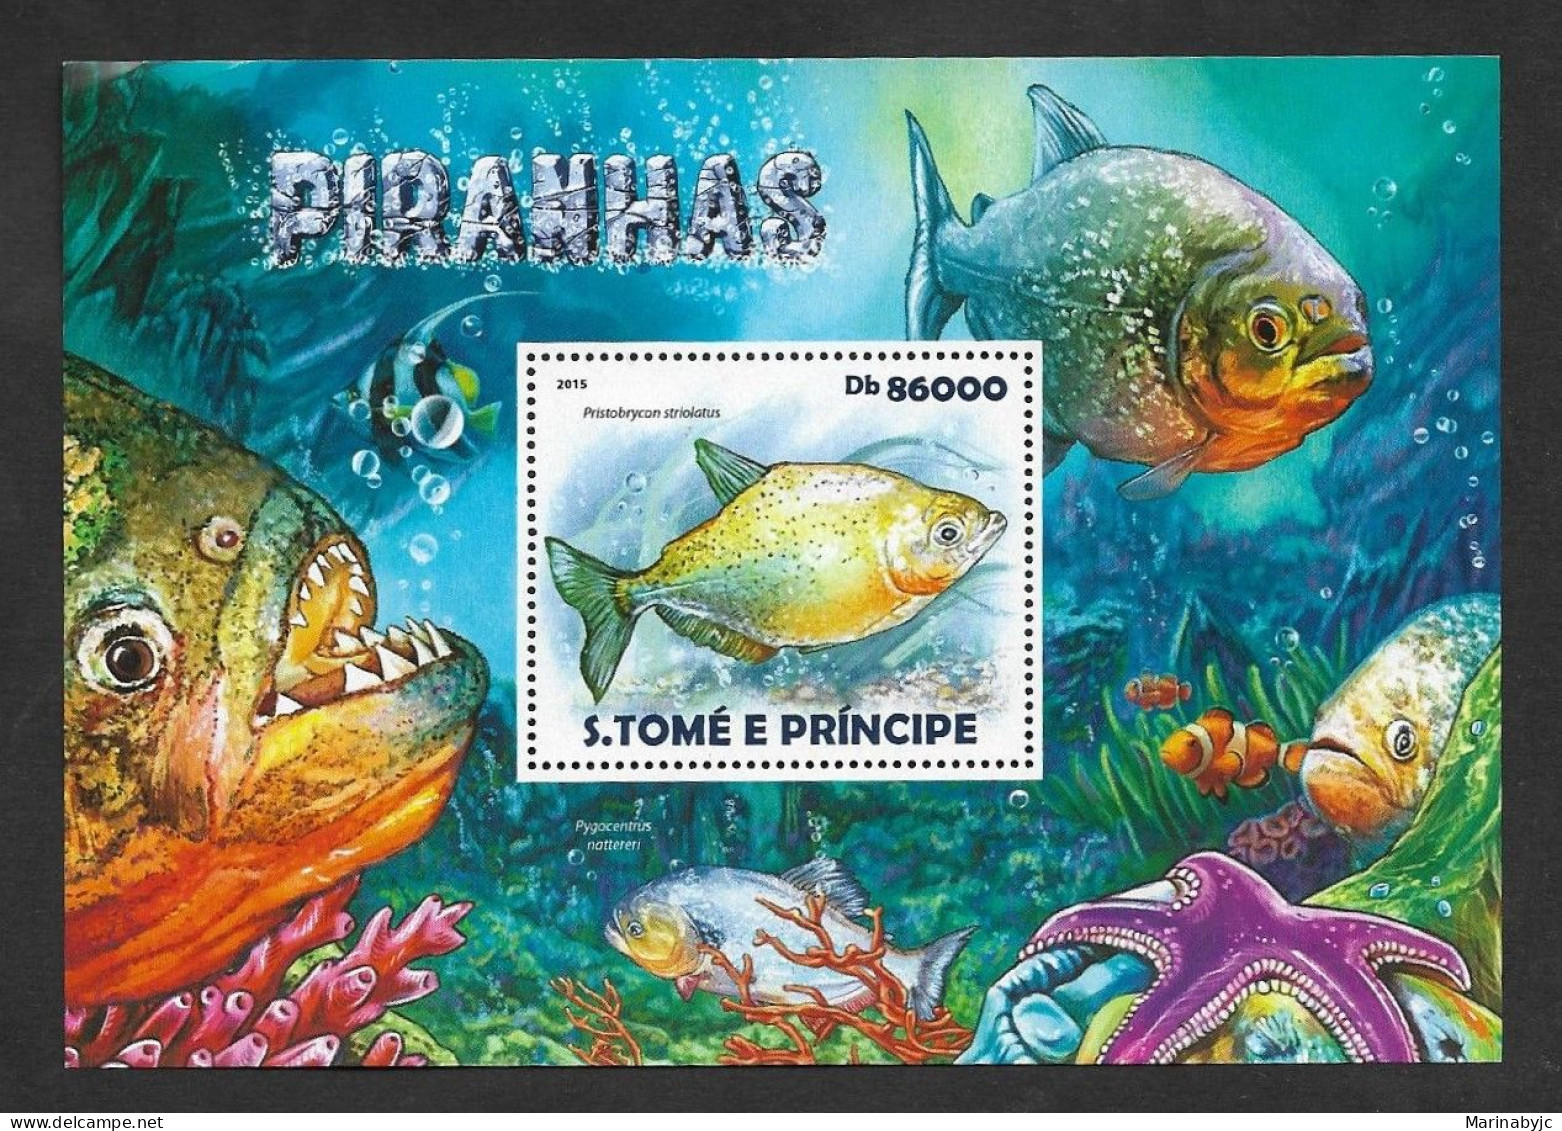 SE)2015 ST. TAKE AND PRINCE  MARINE LIFE, PIRANHAS, PRISTOBRYCON STRIOLATUS FISH, SOUVENIR LEAF, MNH - São Tomé Und Príncipe